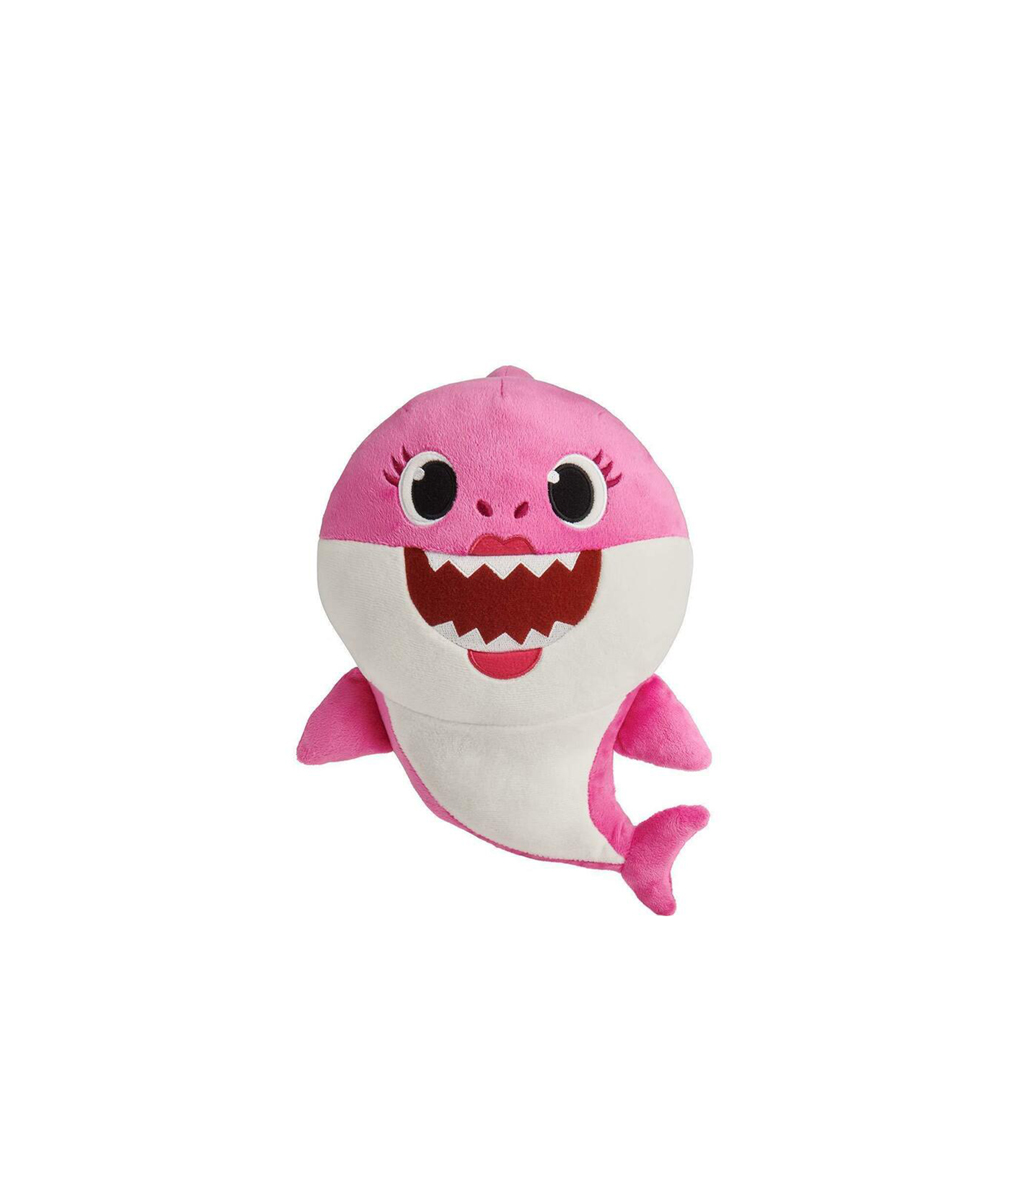 buy baby shark toy